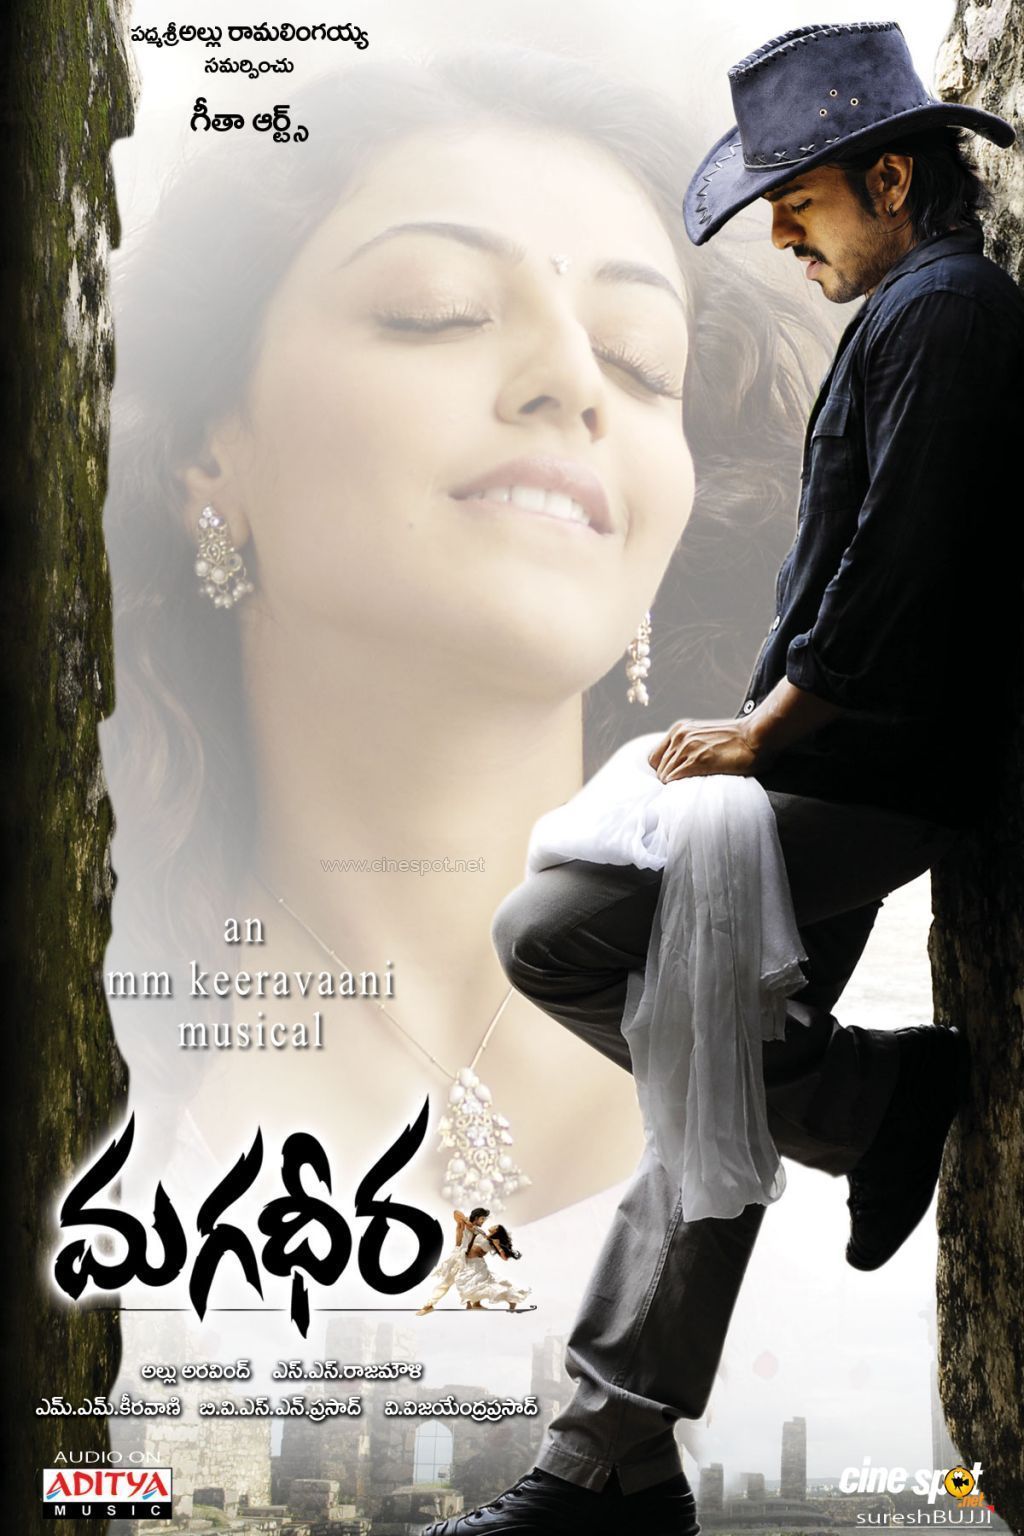 Telugu Movie Poster Wallpapers - Wallpaper Cave